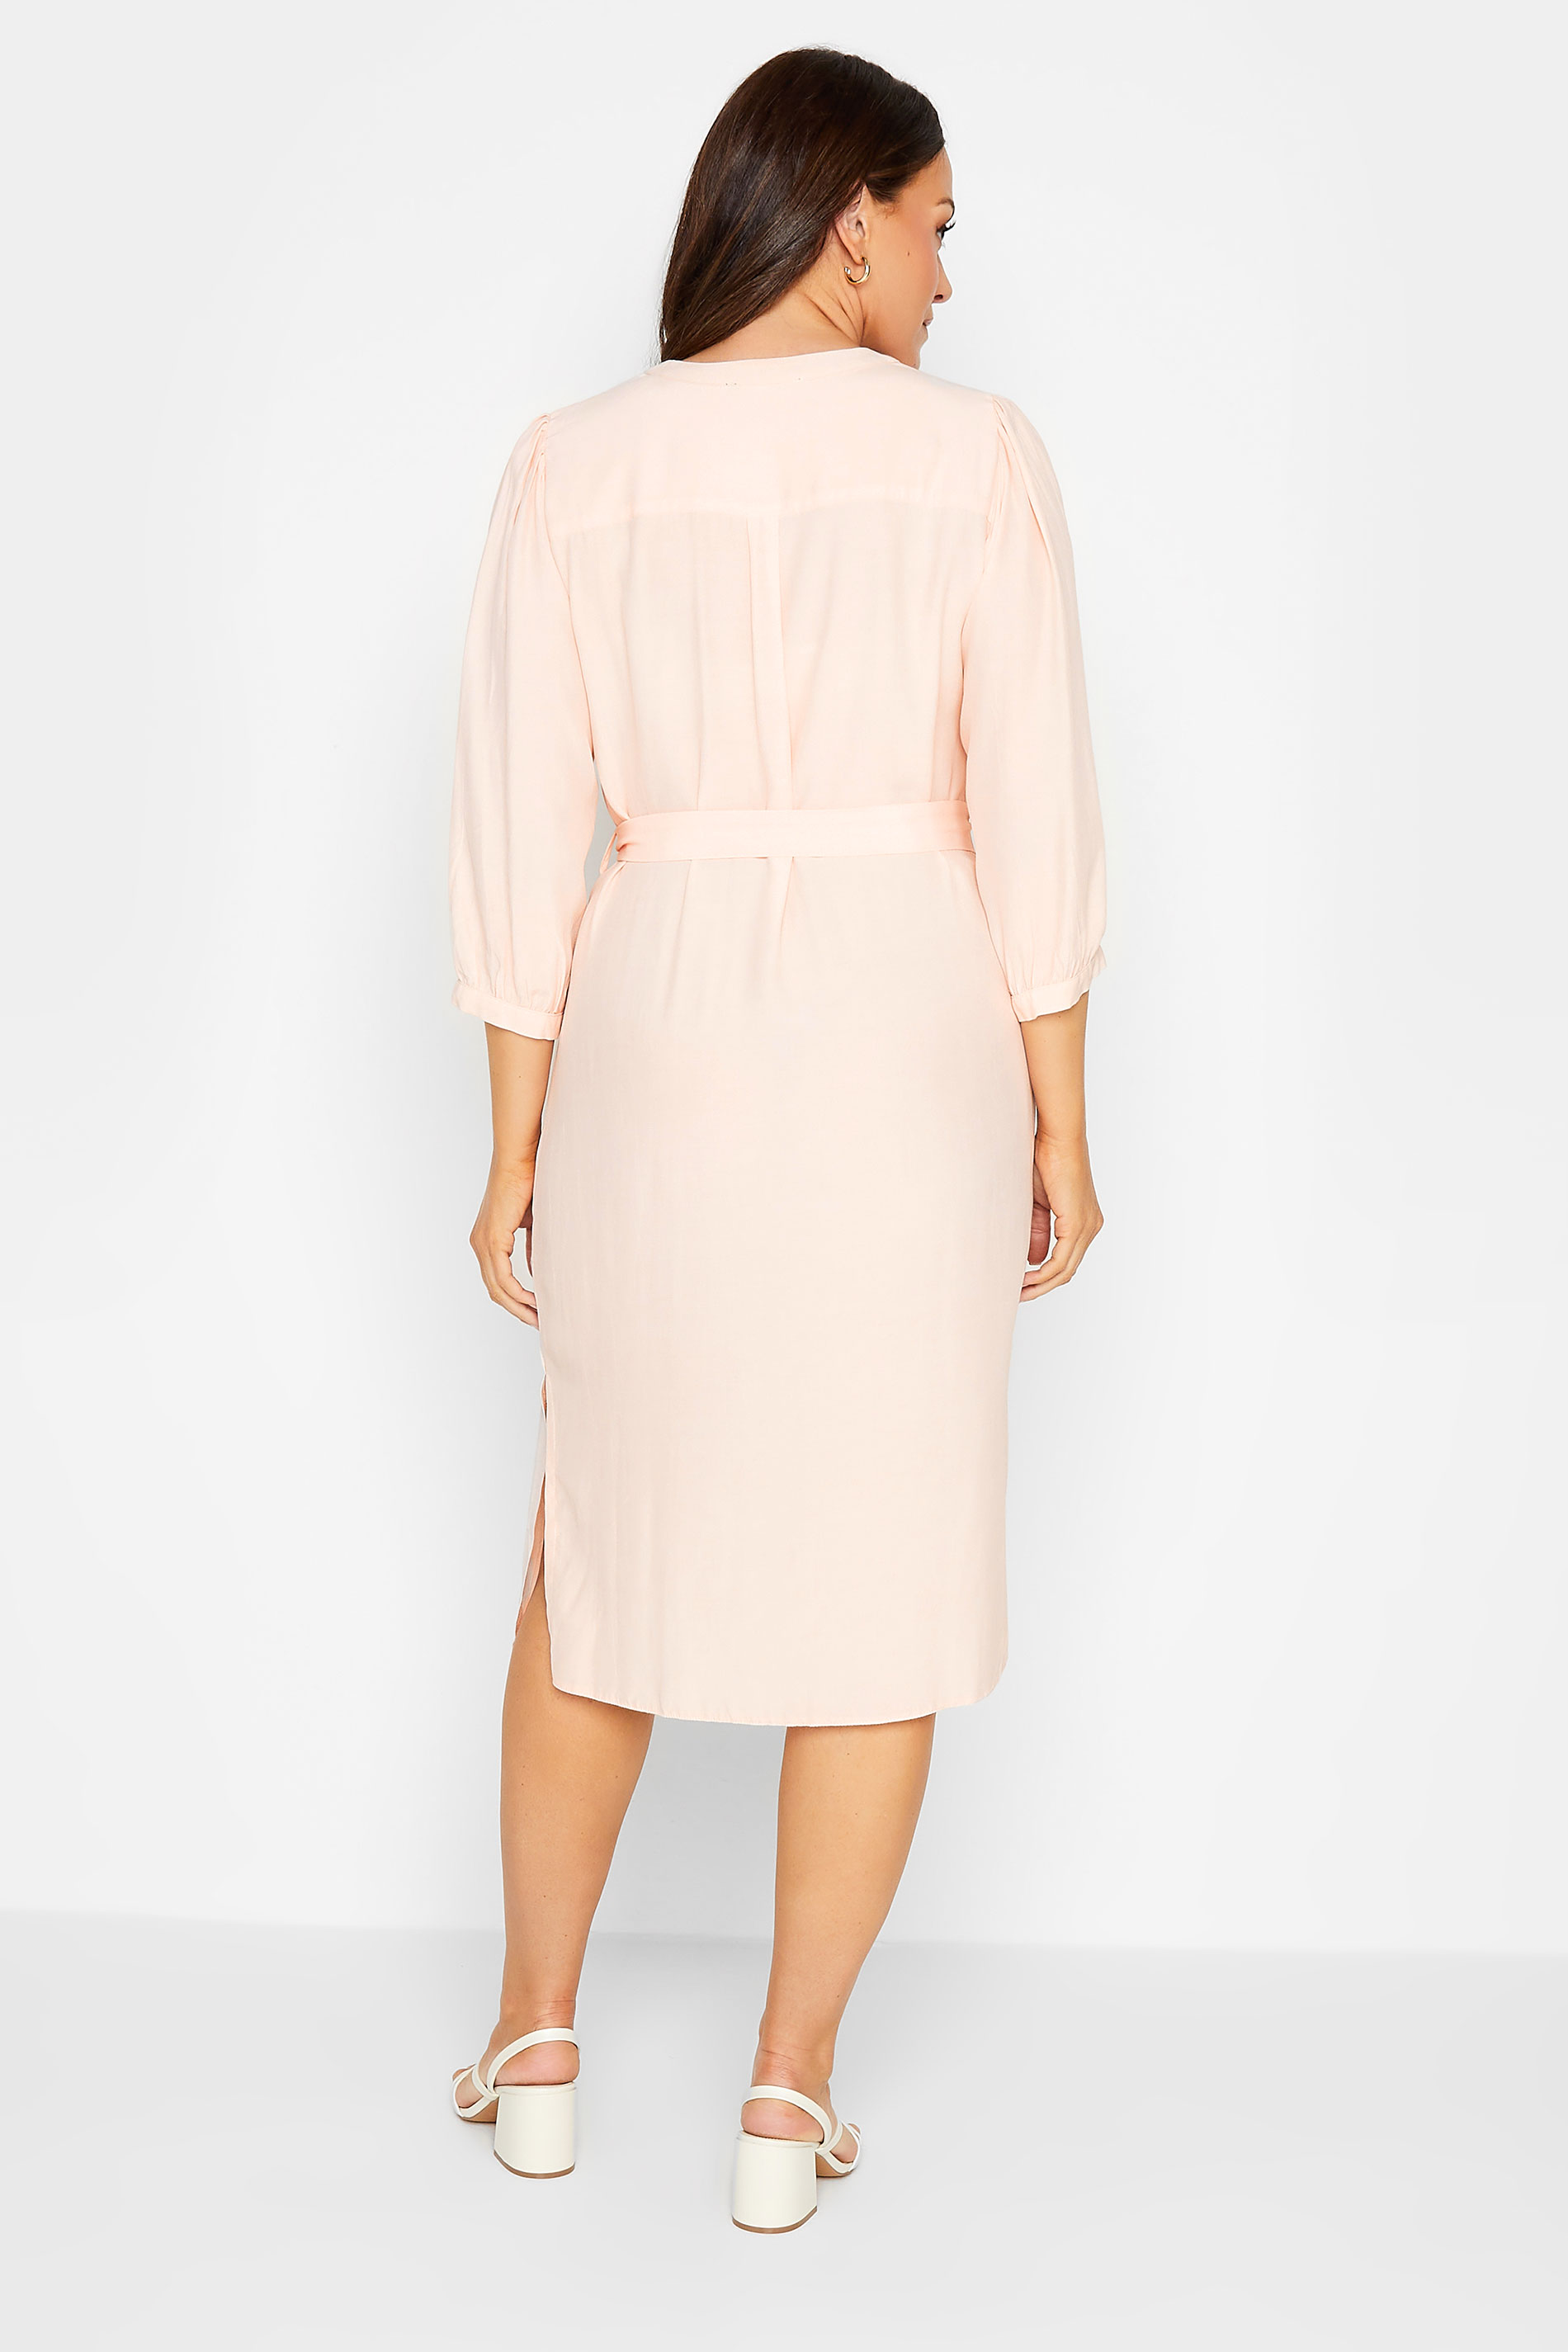 M&Co Light Pink Tie Waist Tunic Dress | M&Co 3